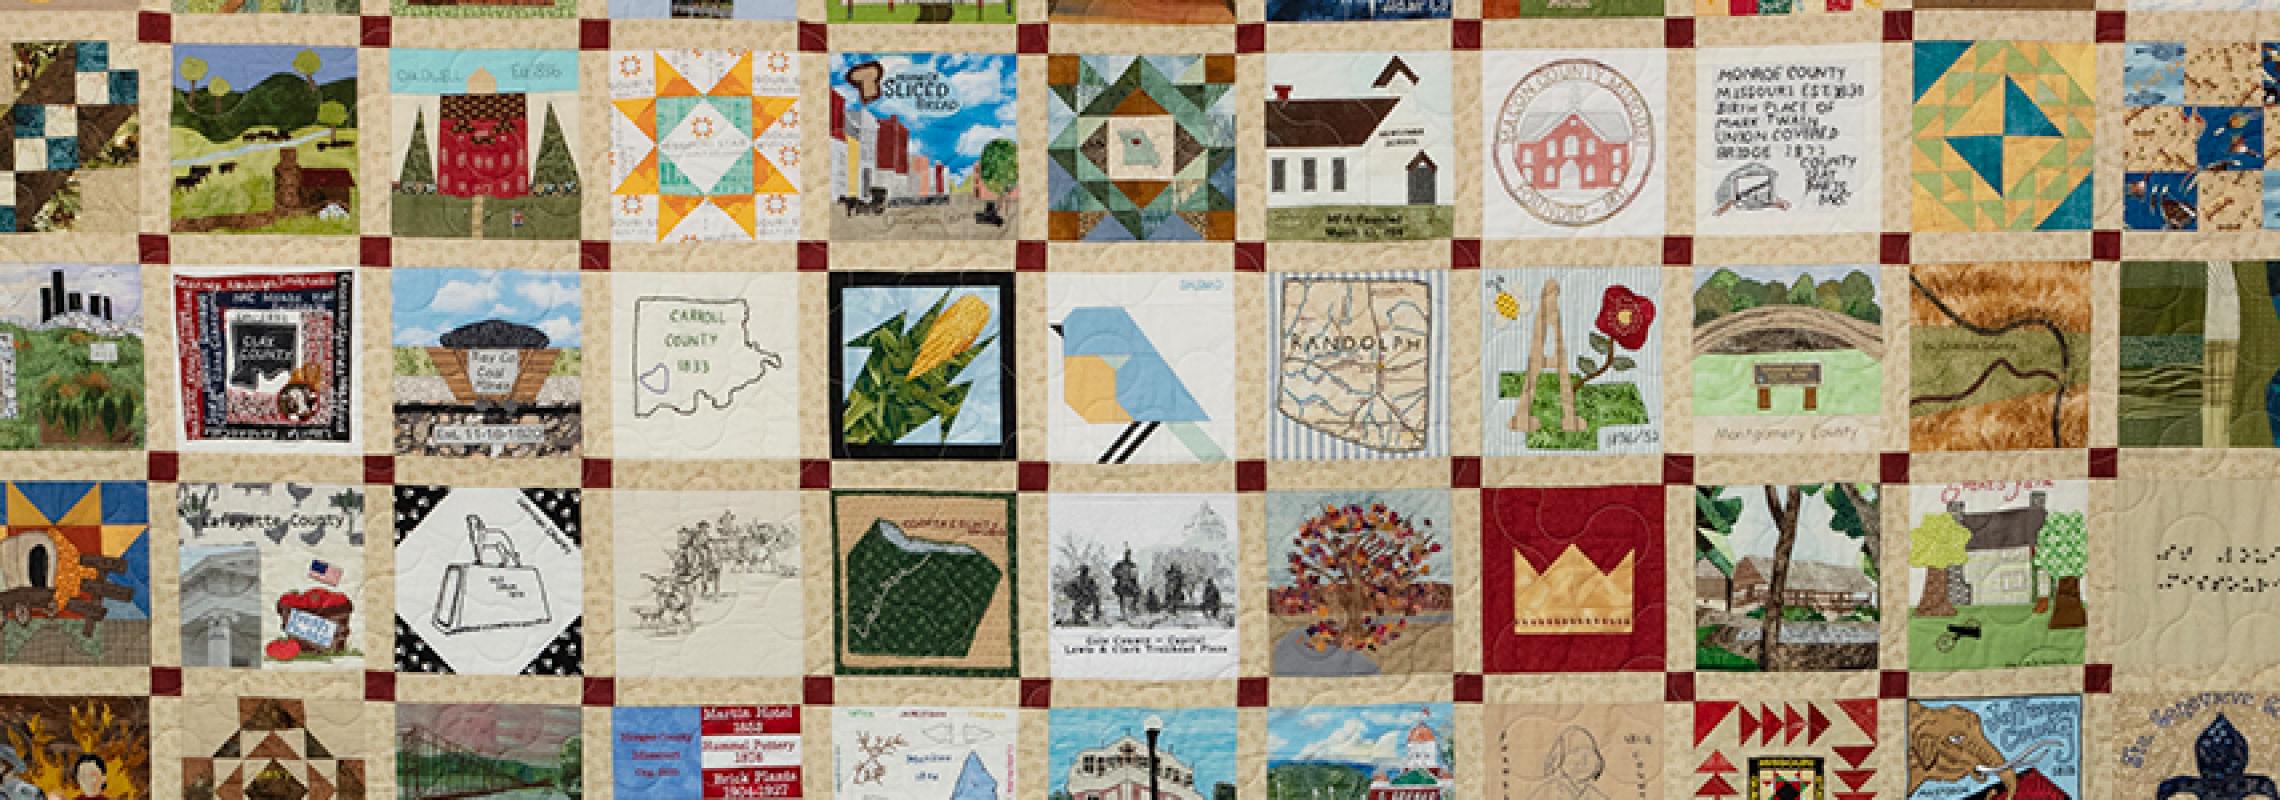 Missouri Bicentennial Quilt features blocks from all Missouri counties